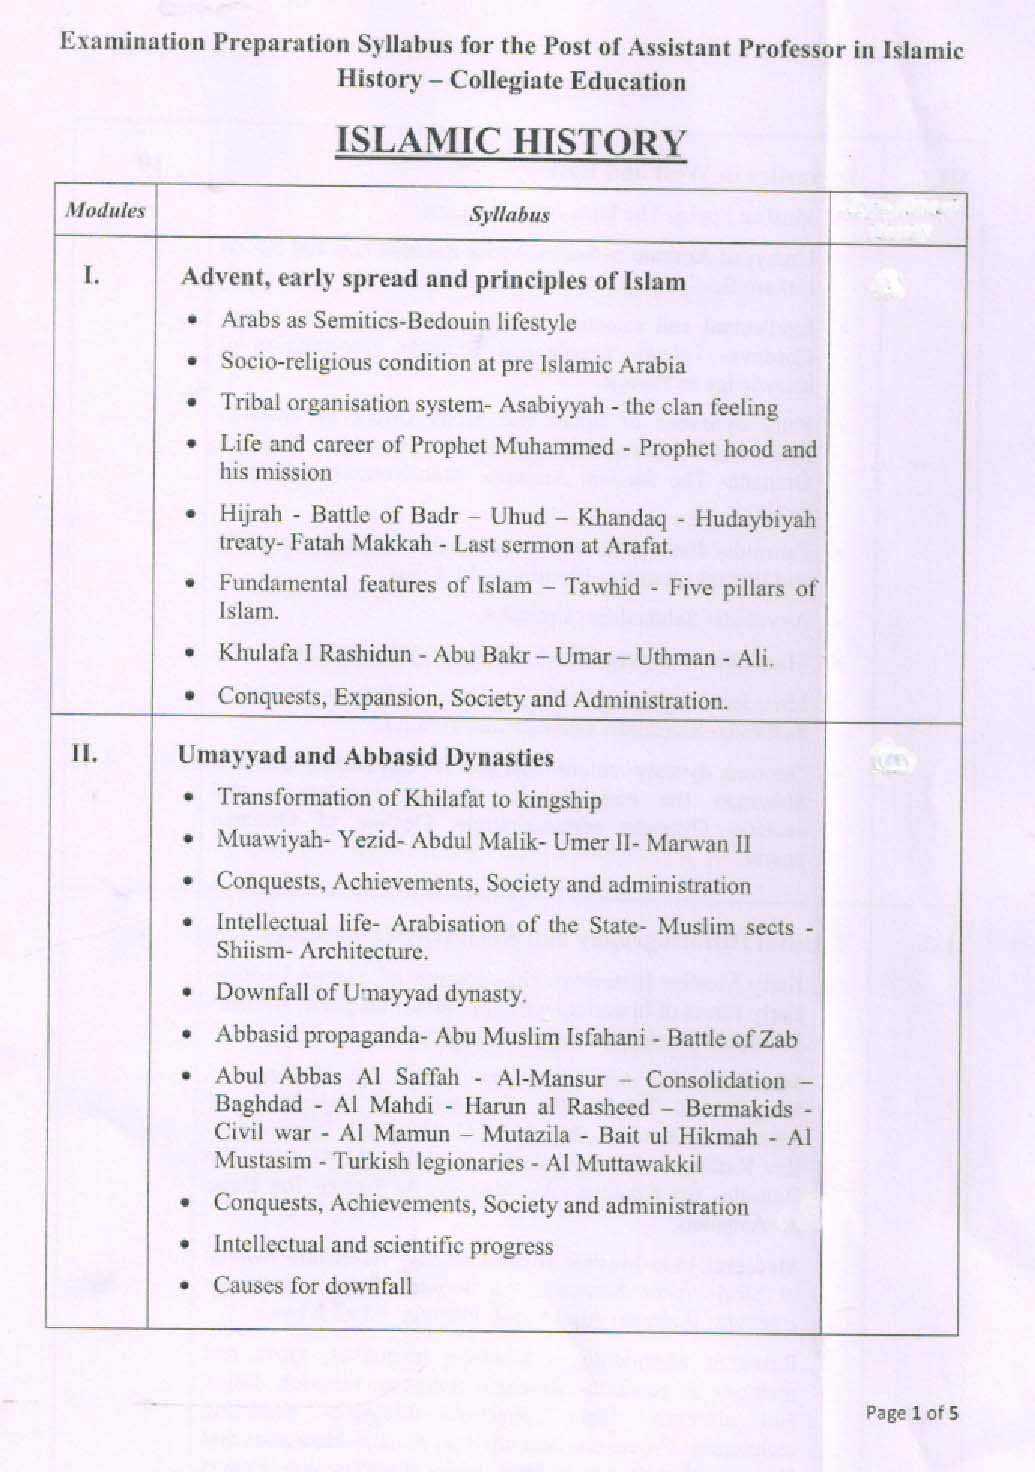 Kerala PSC Assistant Professor Ismalic History Exam Syllabus - Notification Image 1